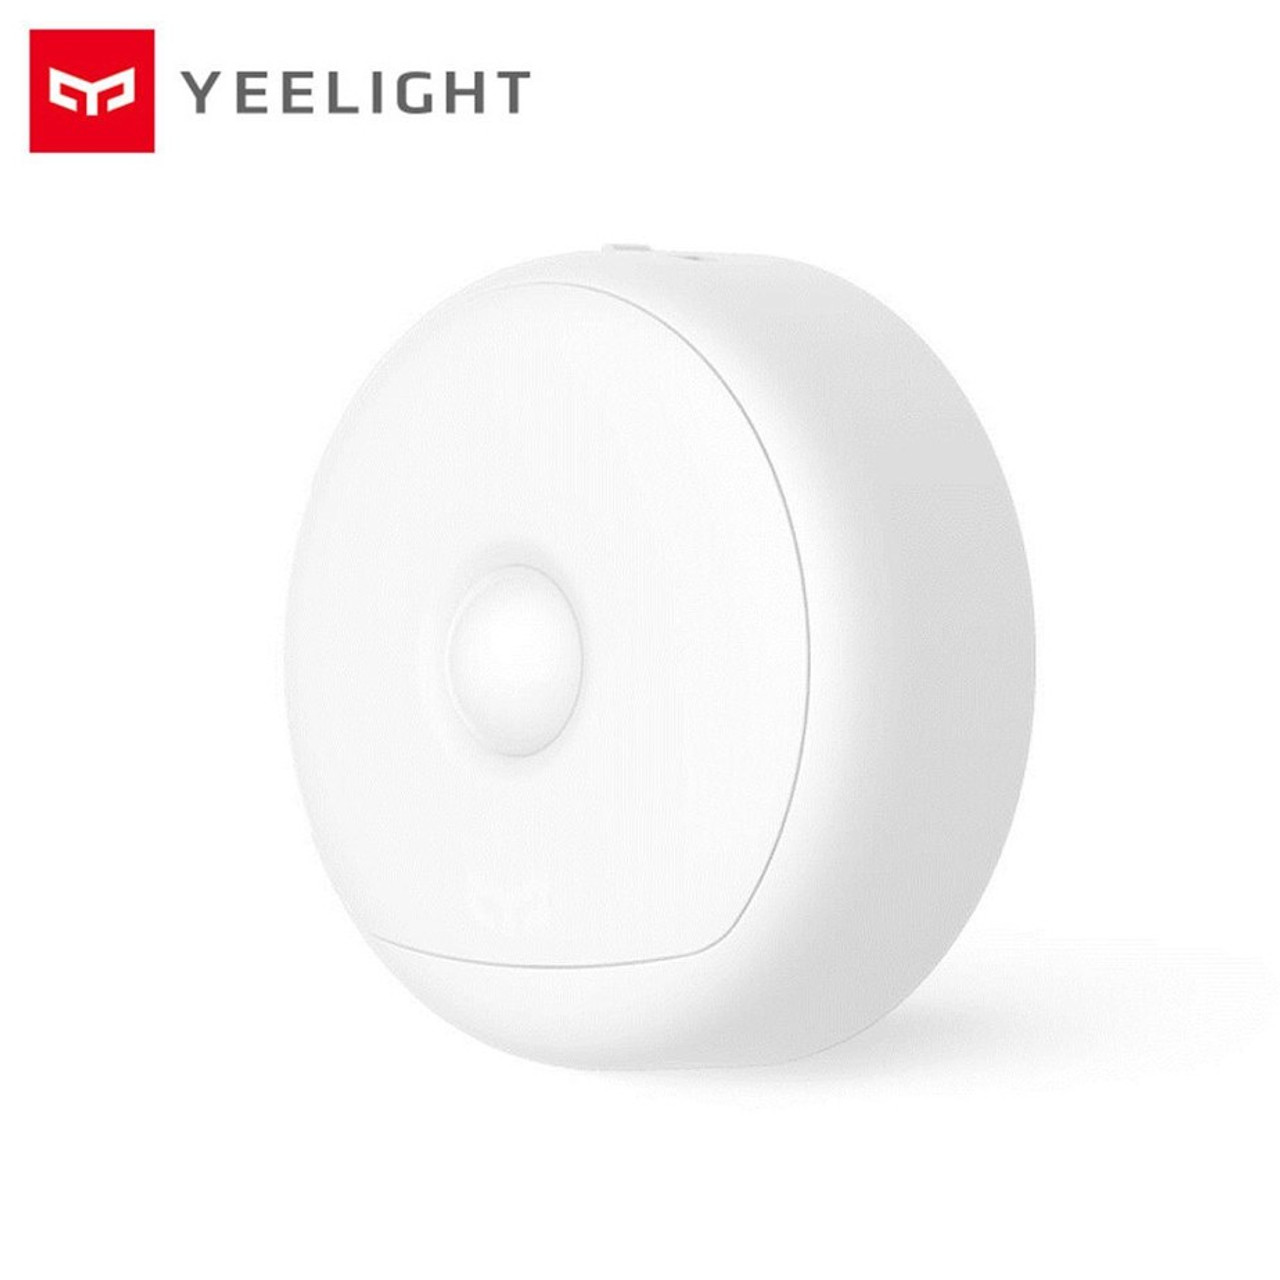 Yeelight Motion Sensor Night Light - Full walkthrough and comparison [2019]  